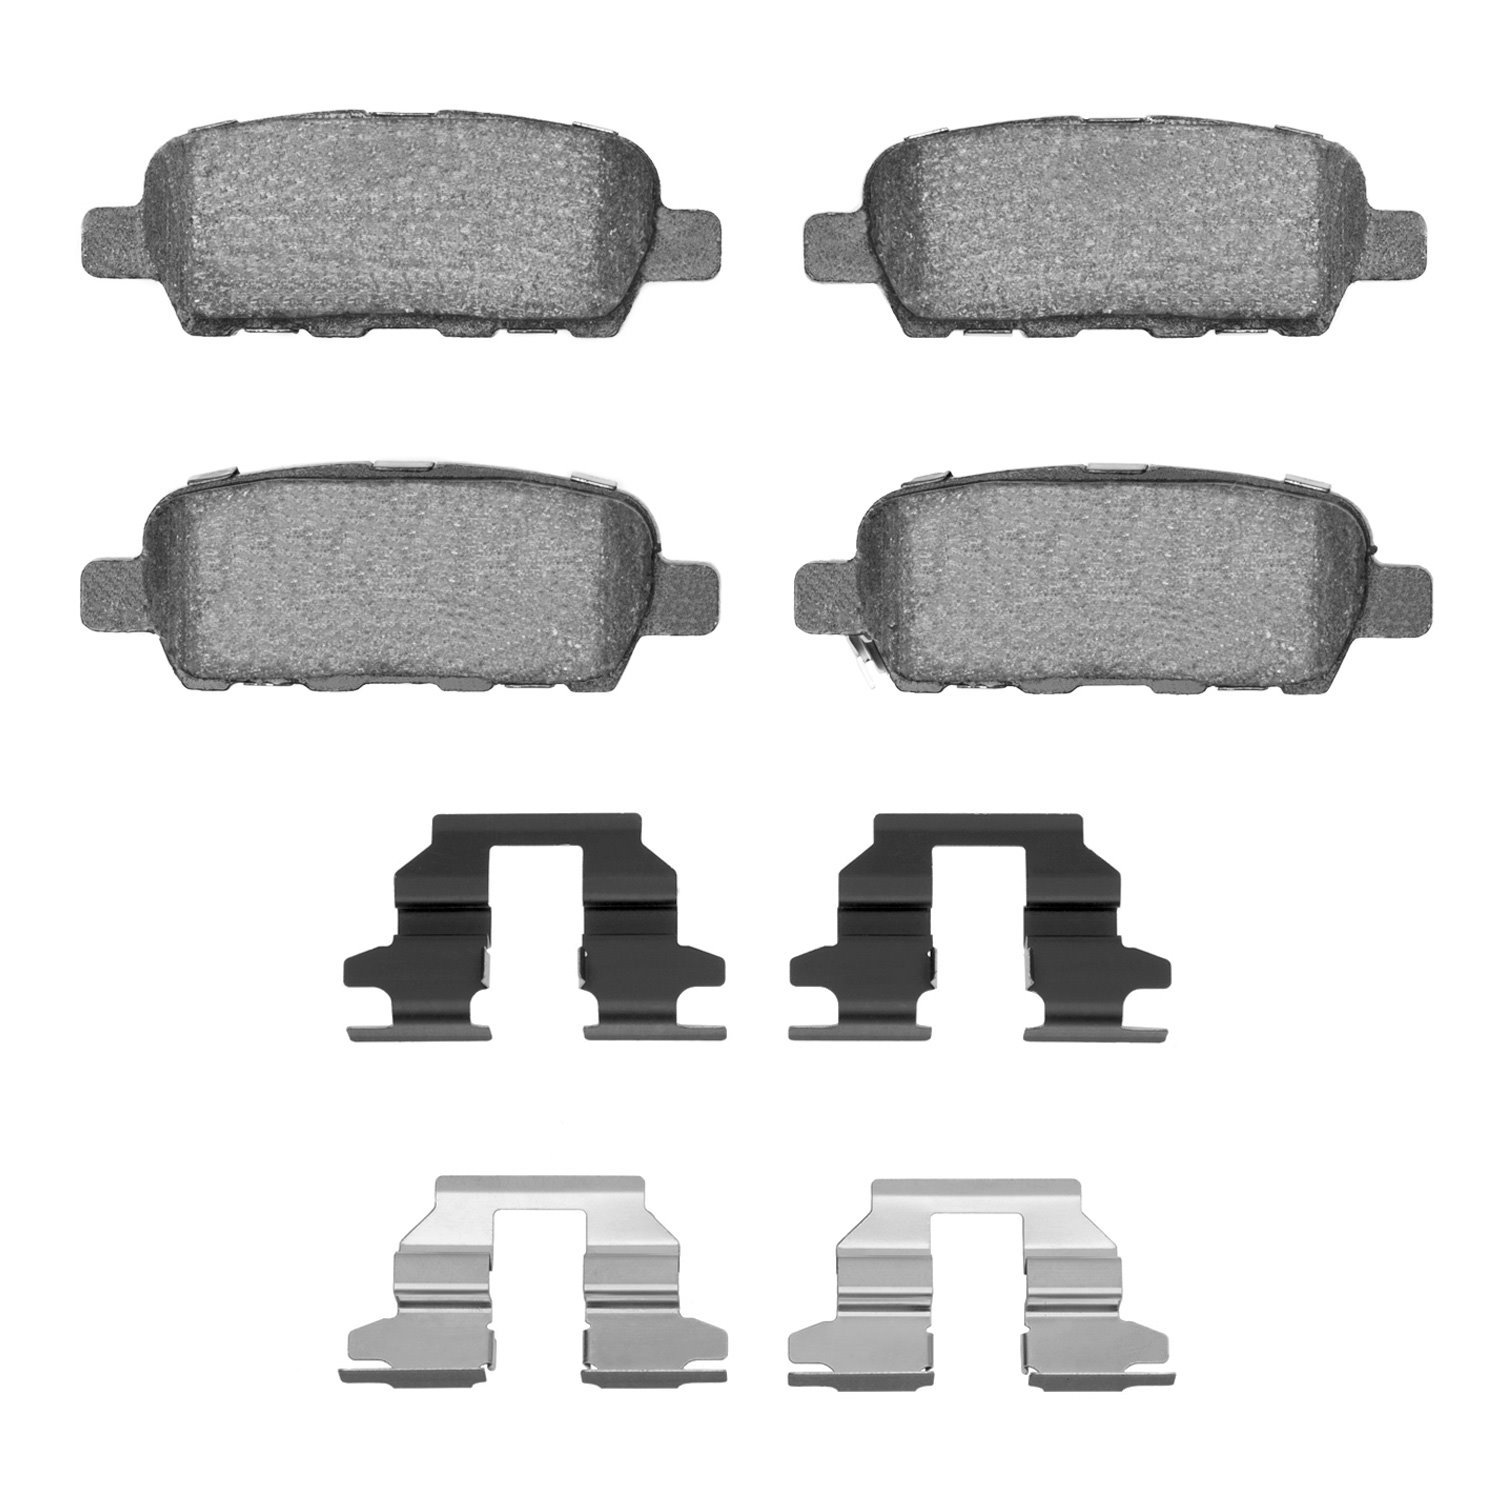 1551-0905-01 5000 Advanced Ceramic Brake Pads & Hardware Kit, Fits Select Multiple Makes/Models, Position: Rear